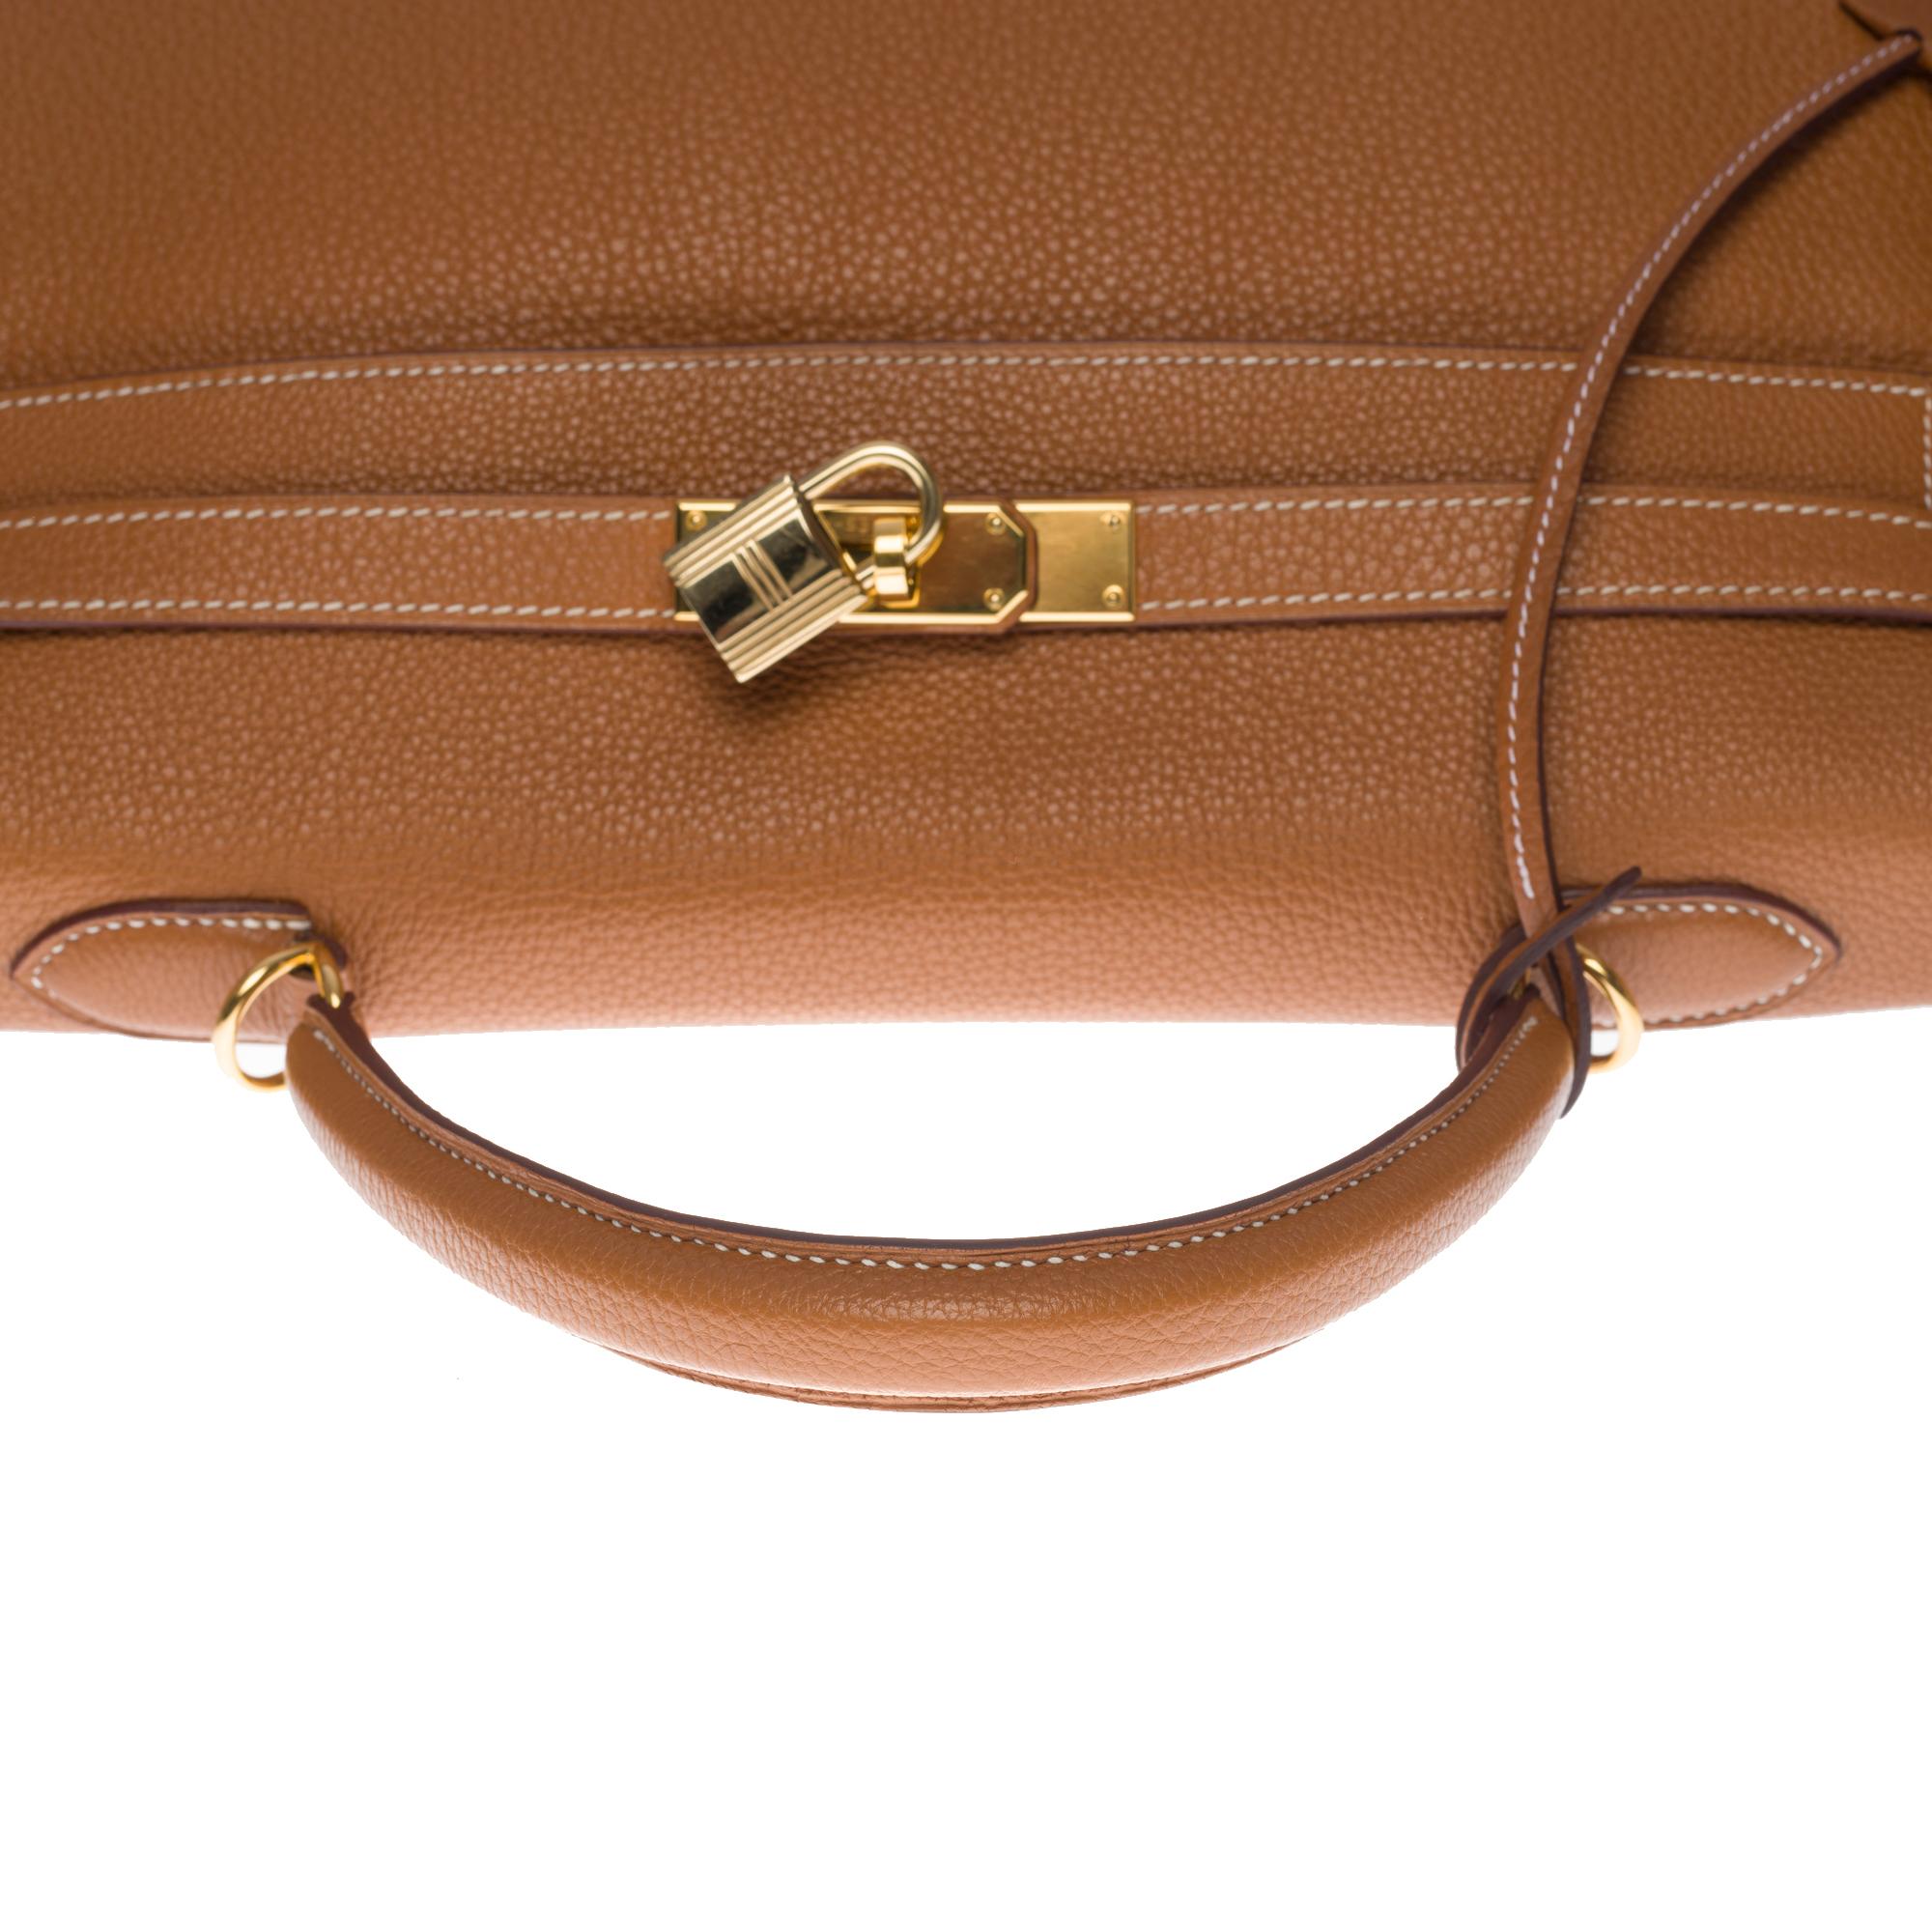 Gorgeous Hermès Kelly 35 retourné handbag strap in Gold Togo leather, GHW 2